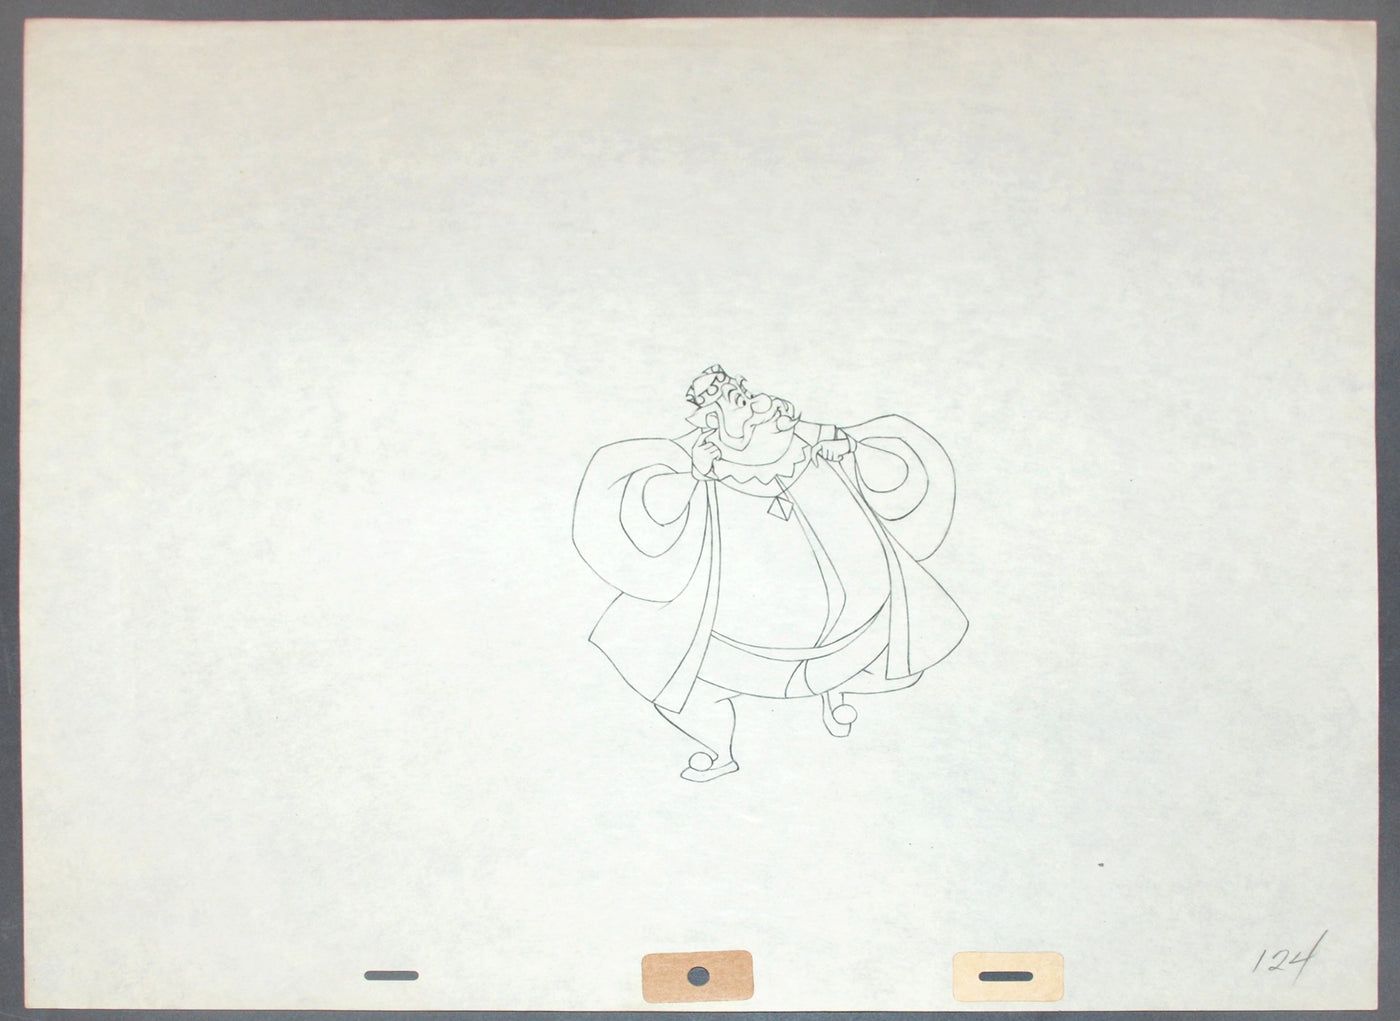 Original Walt Disney Production Drawing from Sleeping Beauty featuring King Hubert